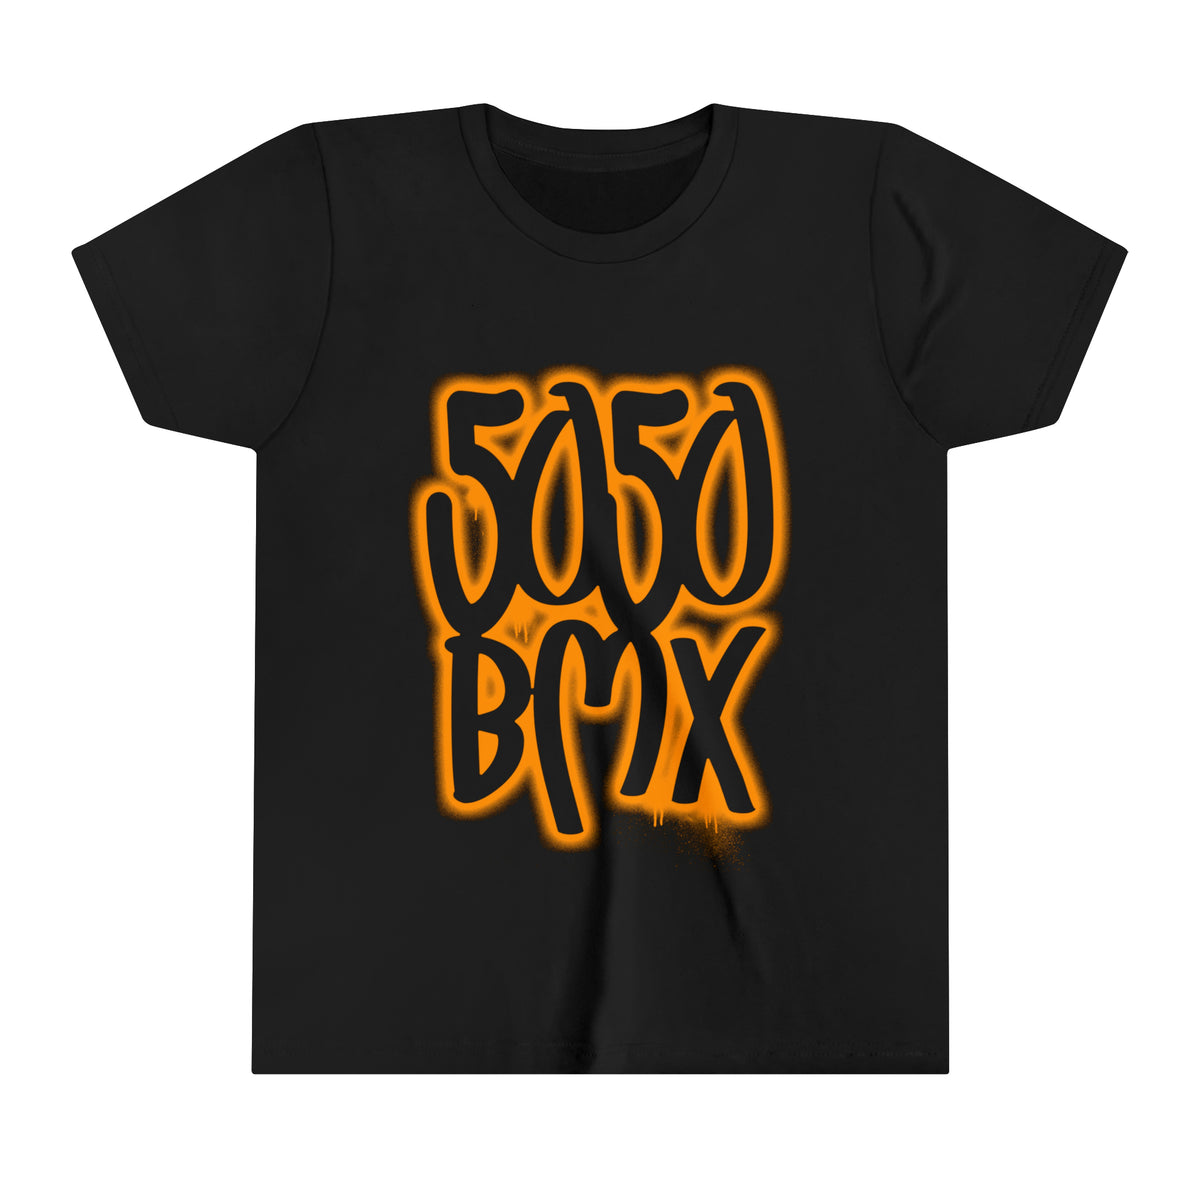 5050bmx Graffiti (Orange) - Youth Short Sleeve Tee